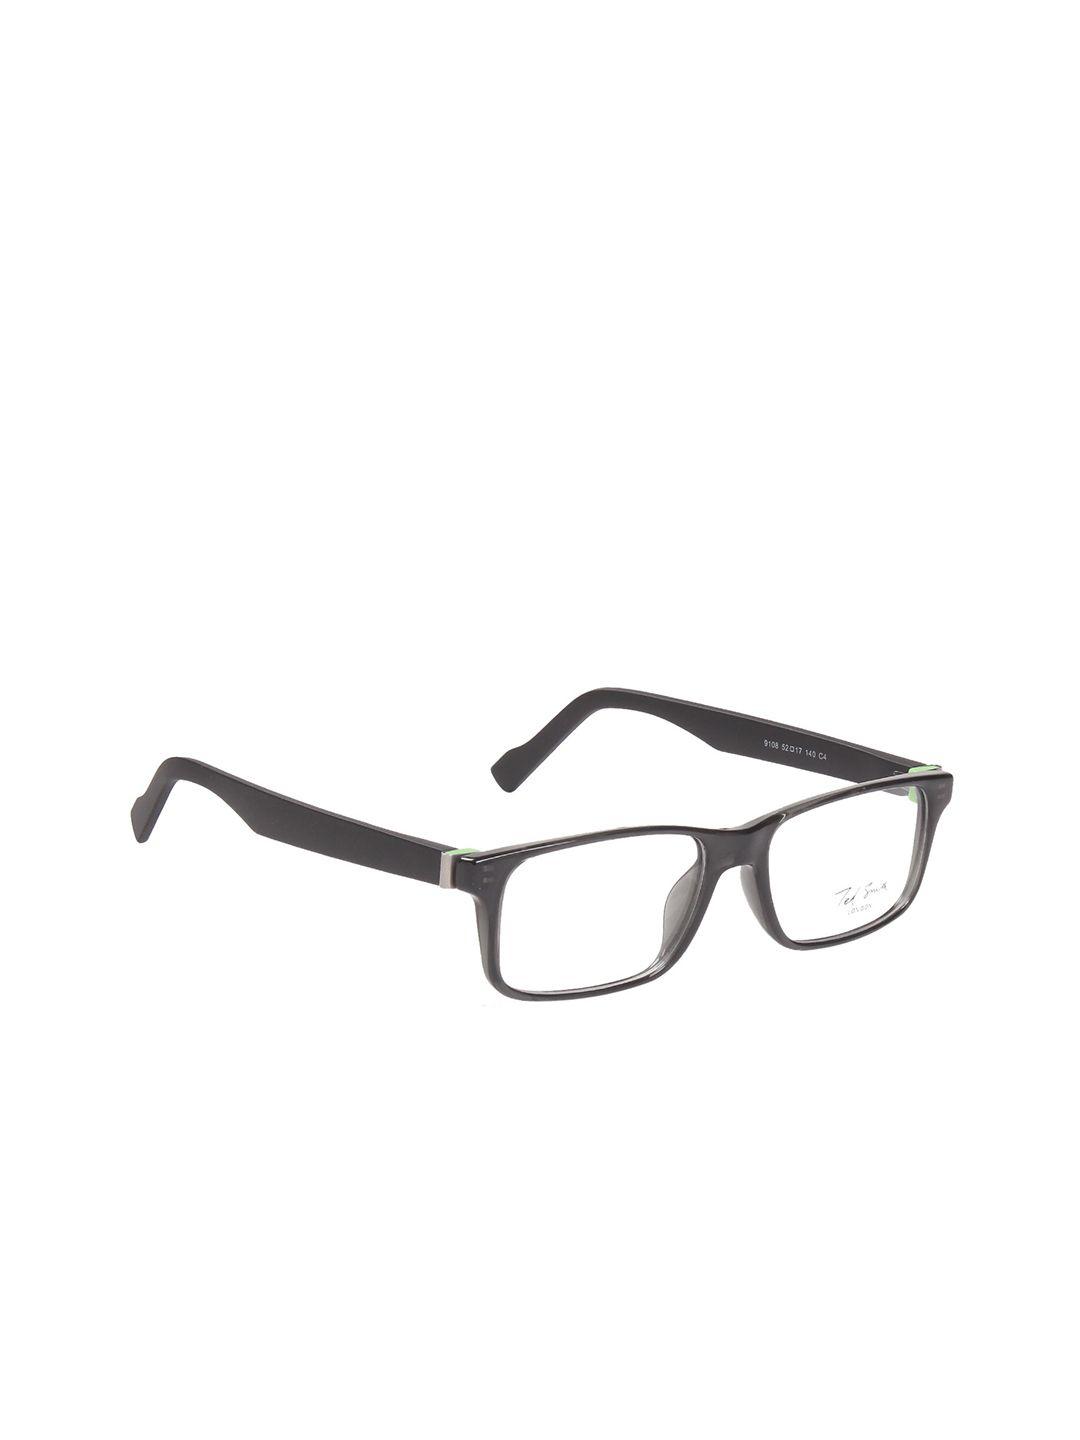 ted smith unisex grey solid full rim wayfarer frames eyeglasses